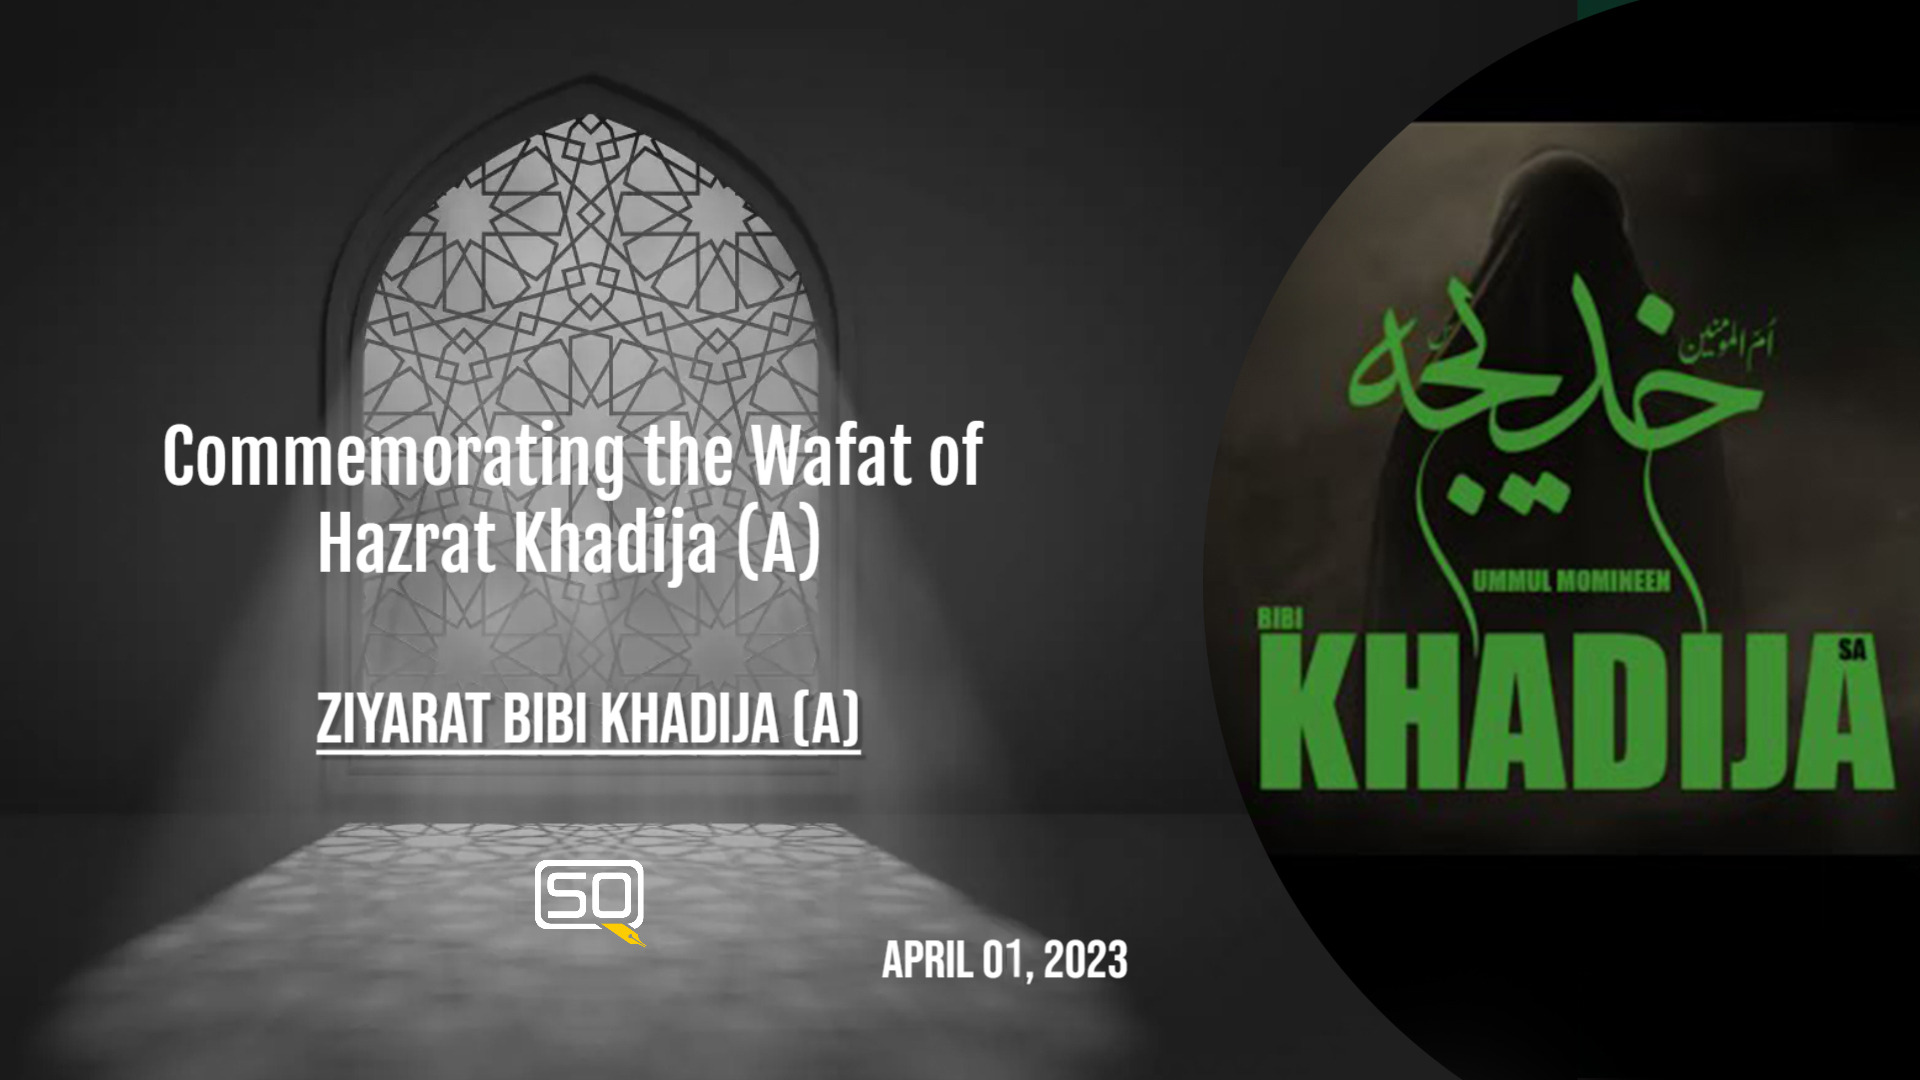 (01April2023) Ziyarat Bibi Khadija (A) | Commemorating the Wafat of Hazrat Khadija (A) | Arabic